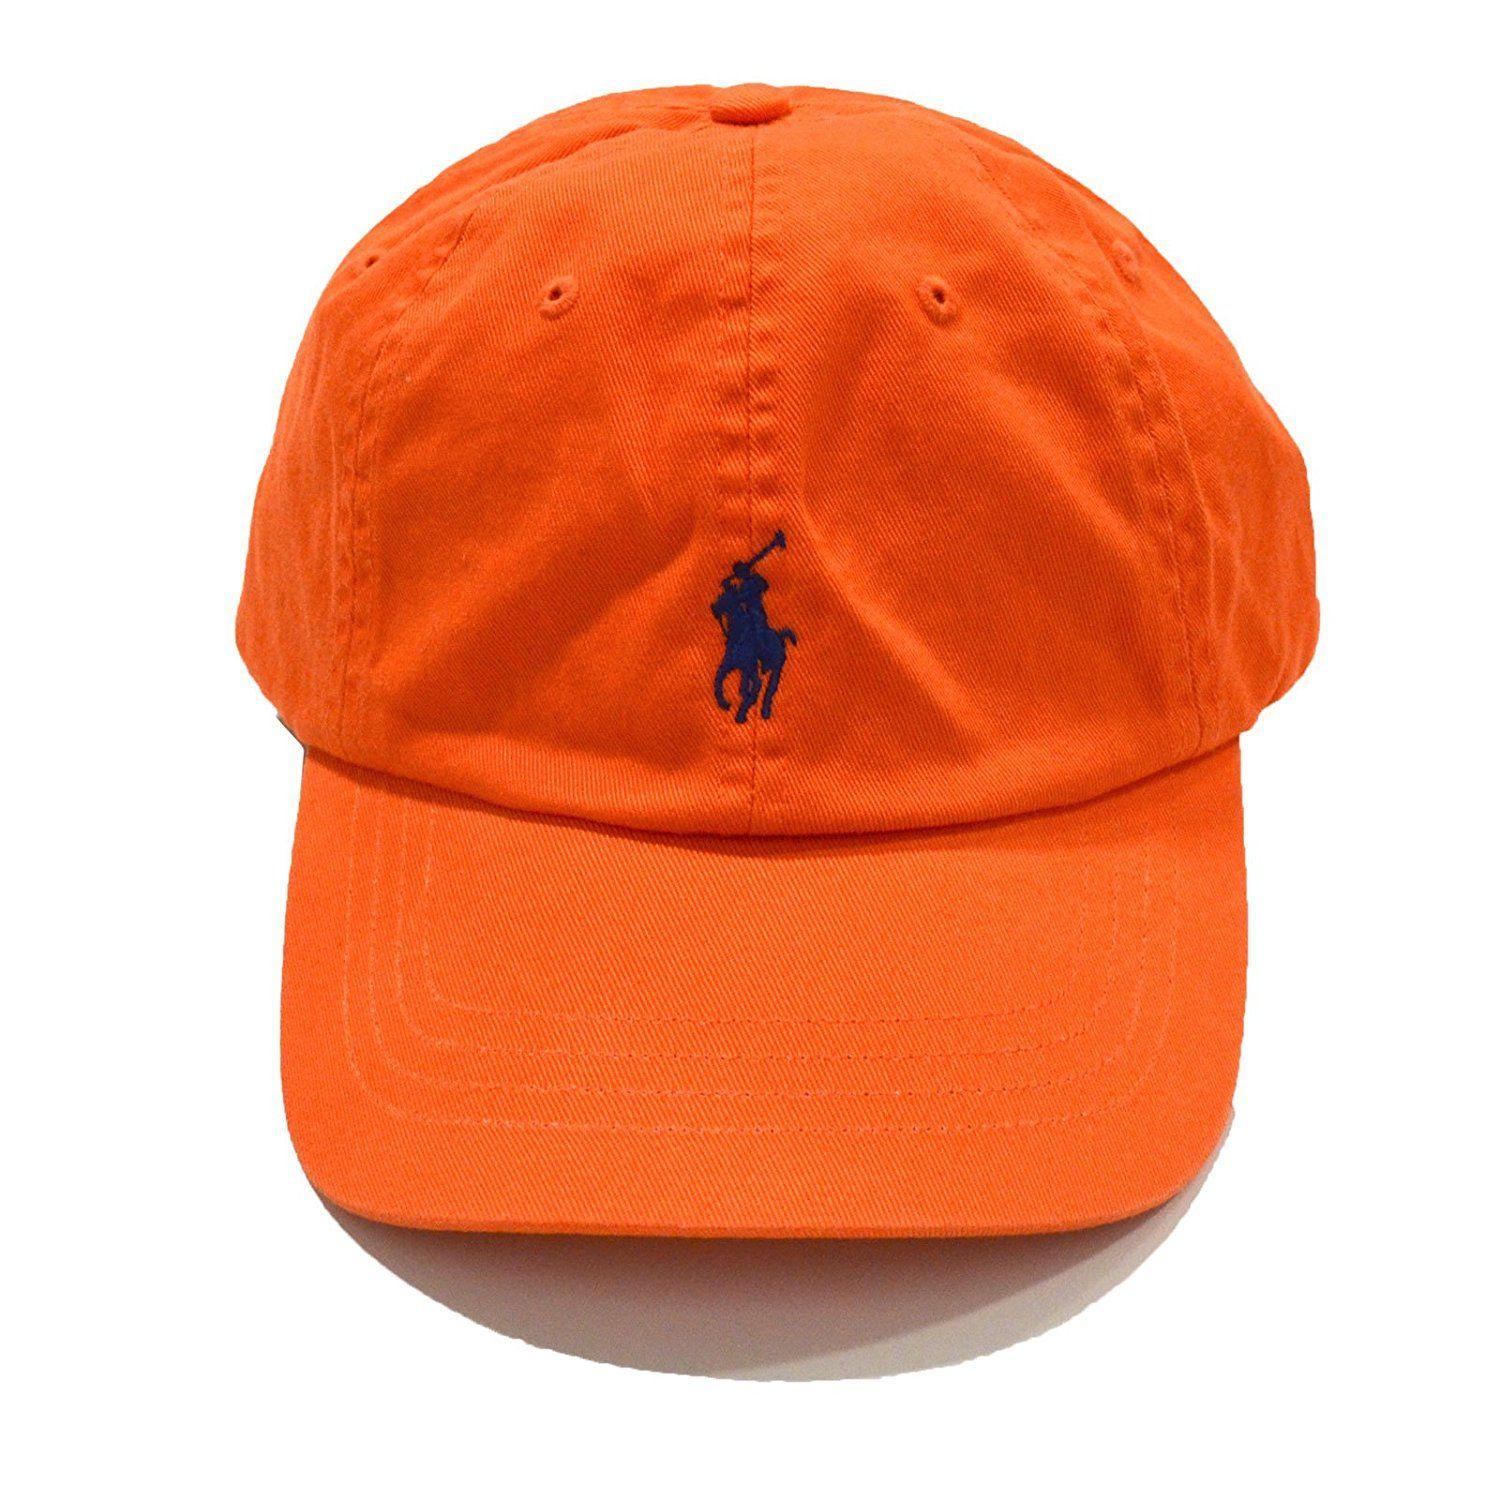 Blue Orange Red Horse Logo - Cheap Cap Horse Logo, find Cap Horse Logo deals on line at Alibaba.com